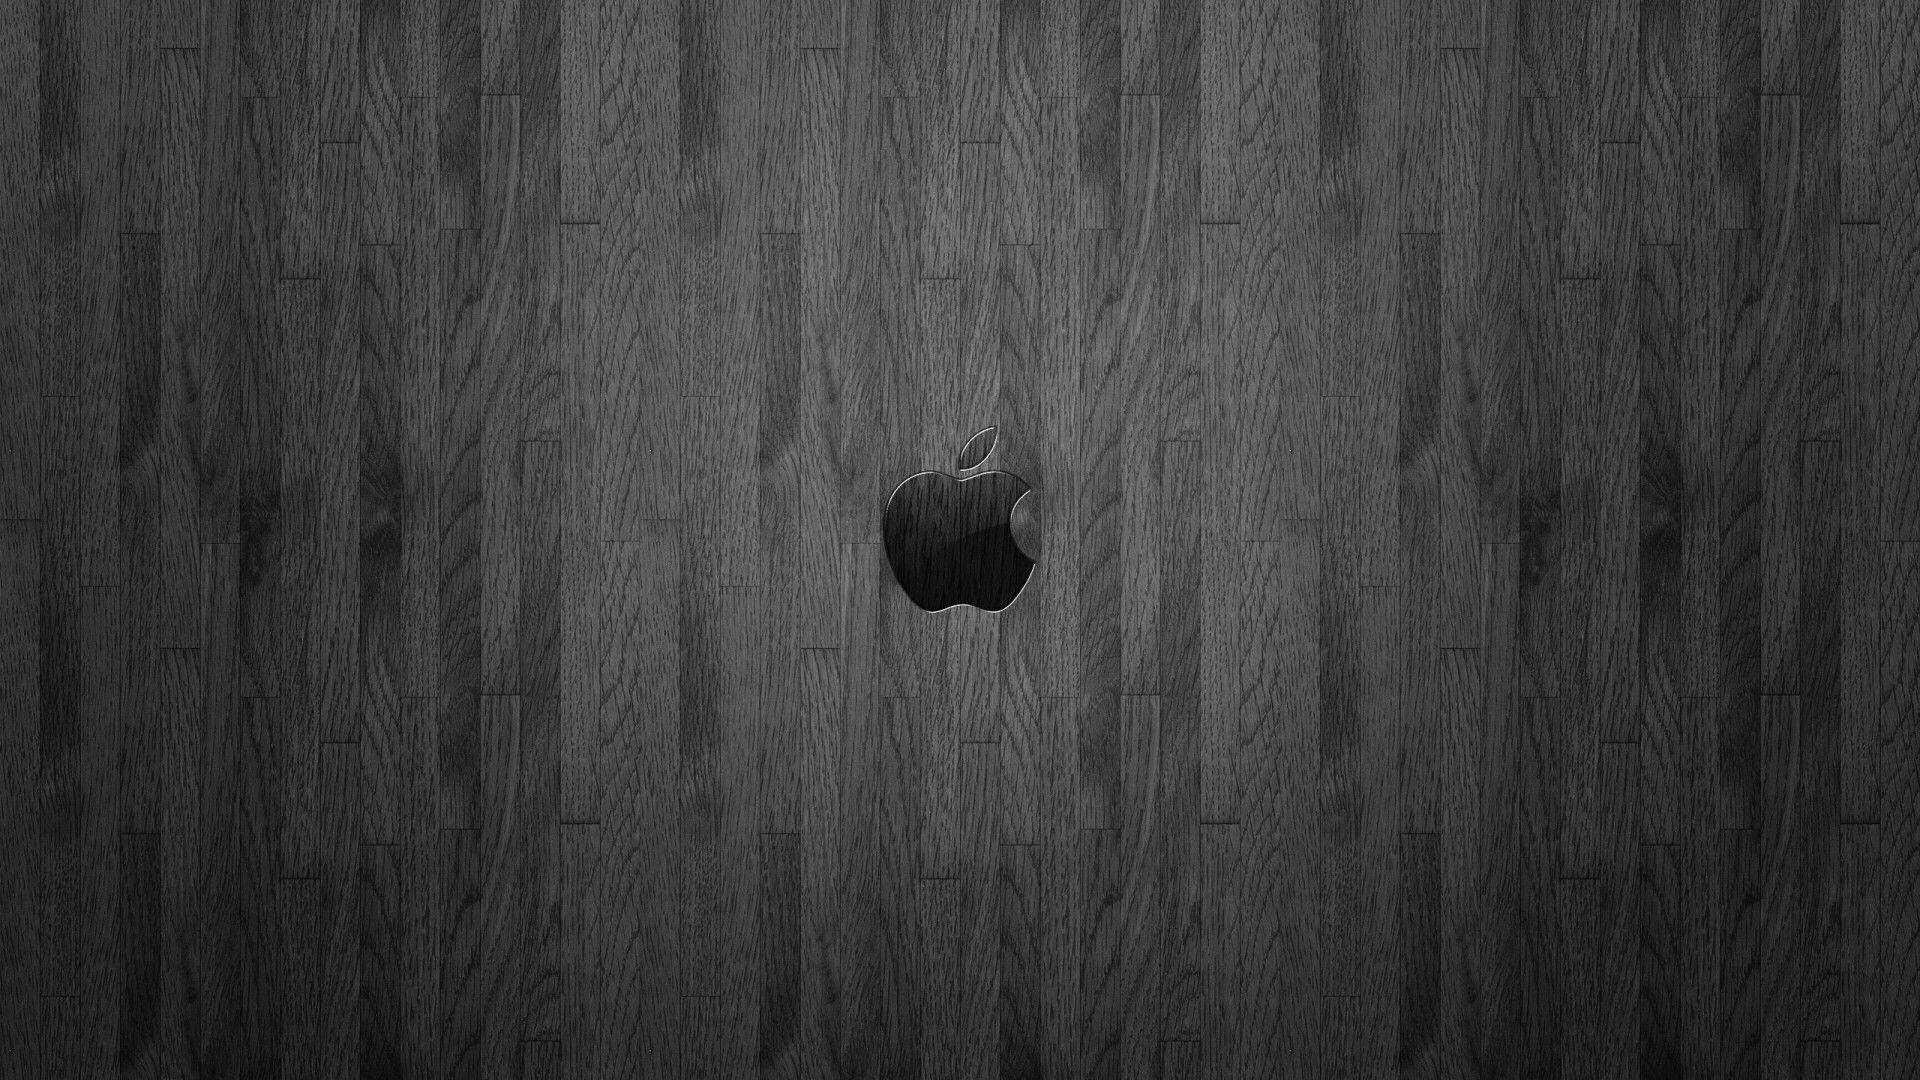 Apple Monochrome Wood Wallpaper 1920x1080PX Wallpaper Black Wood